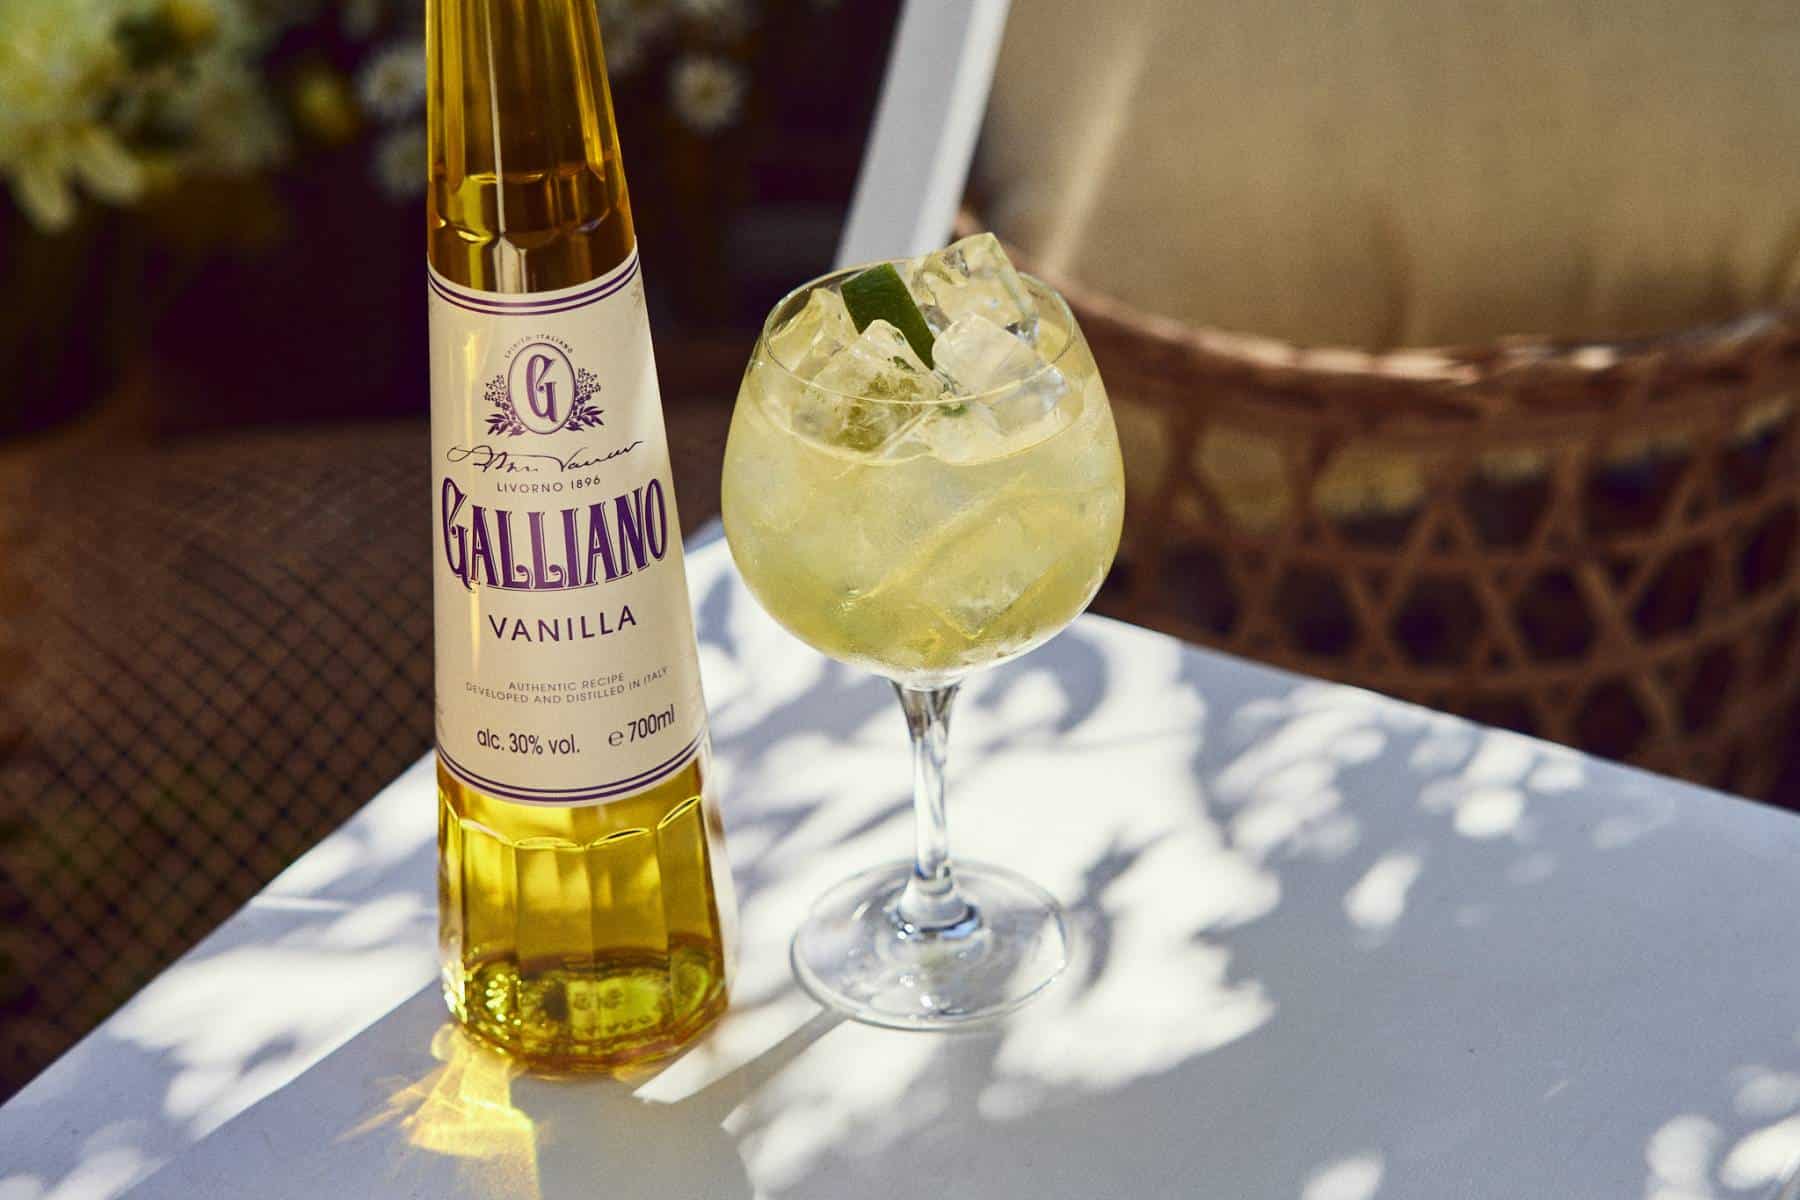 Galliano Vanilla liqueur cocktails